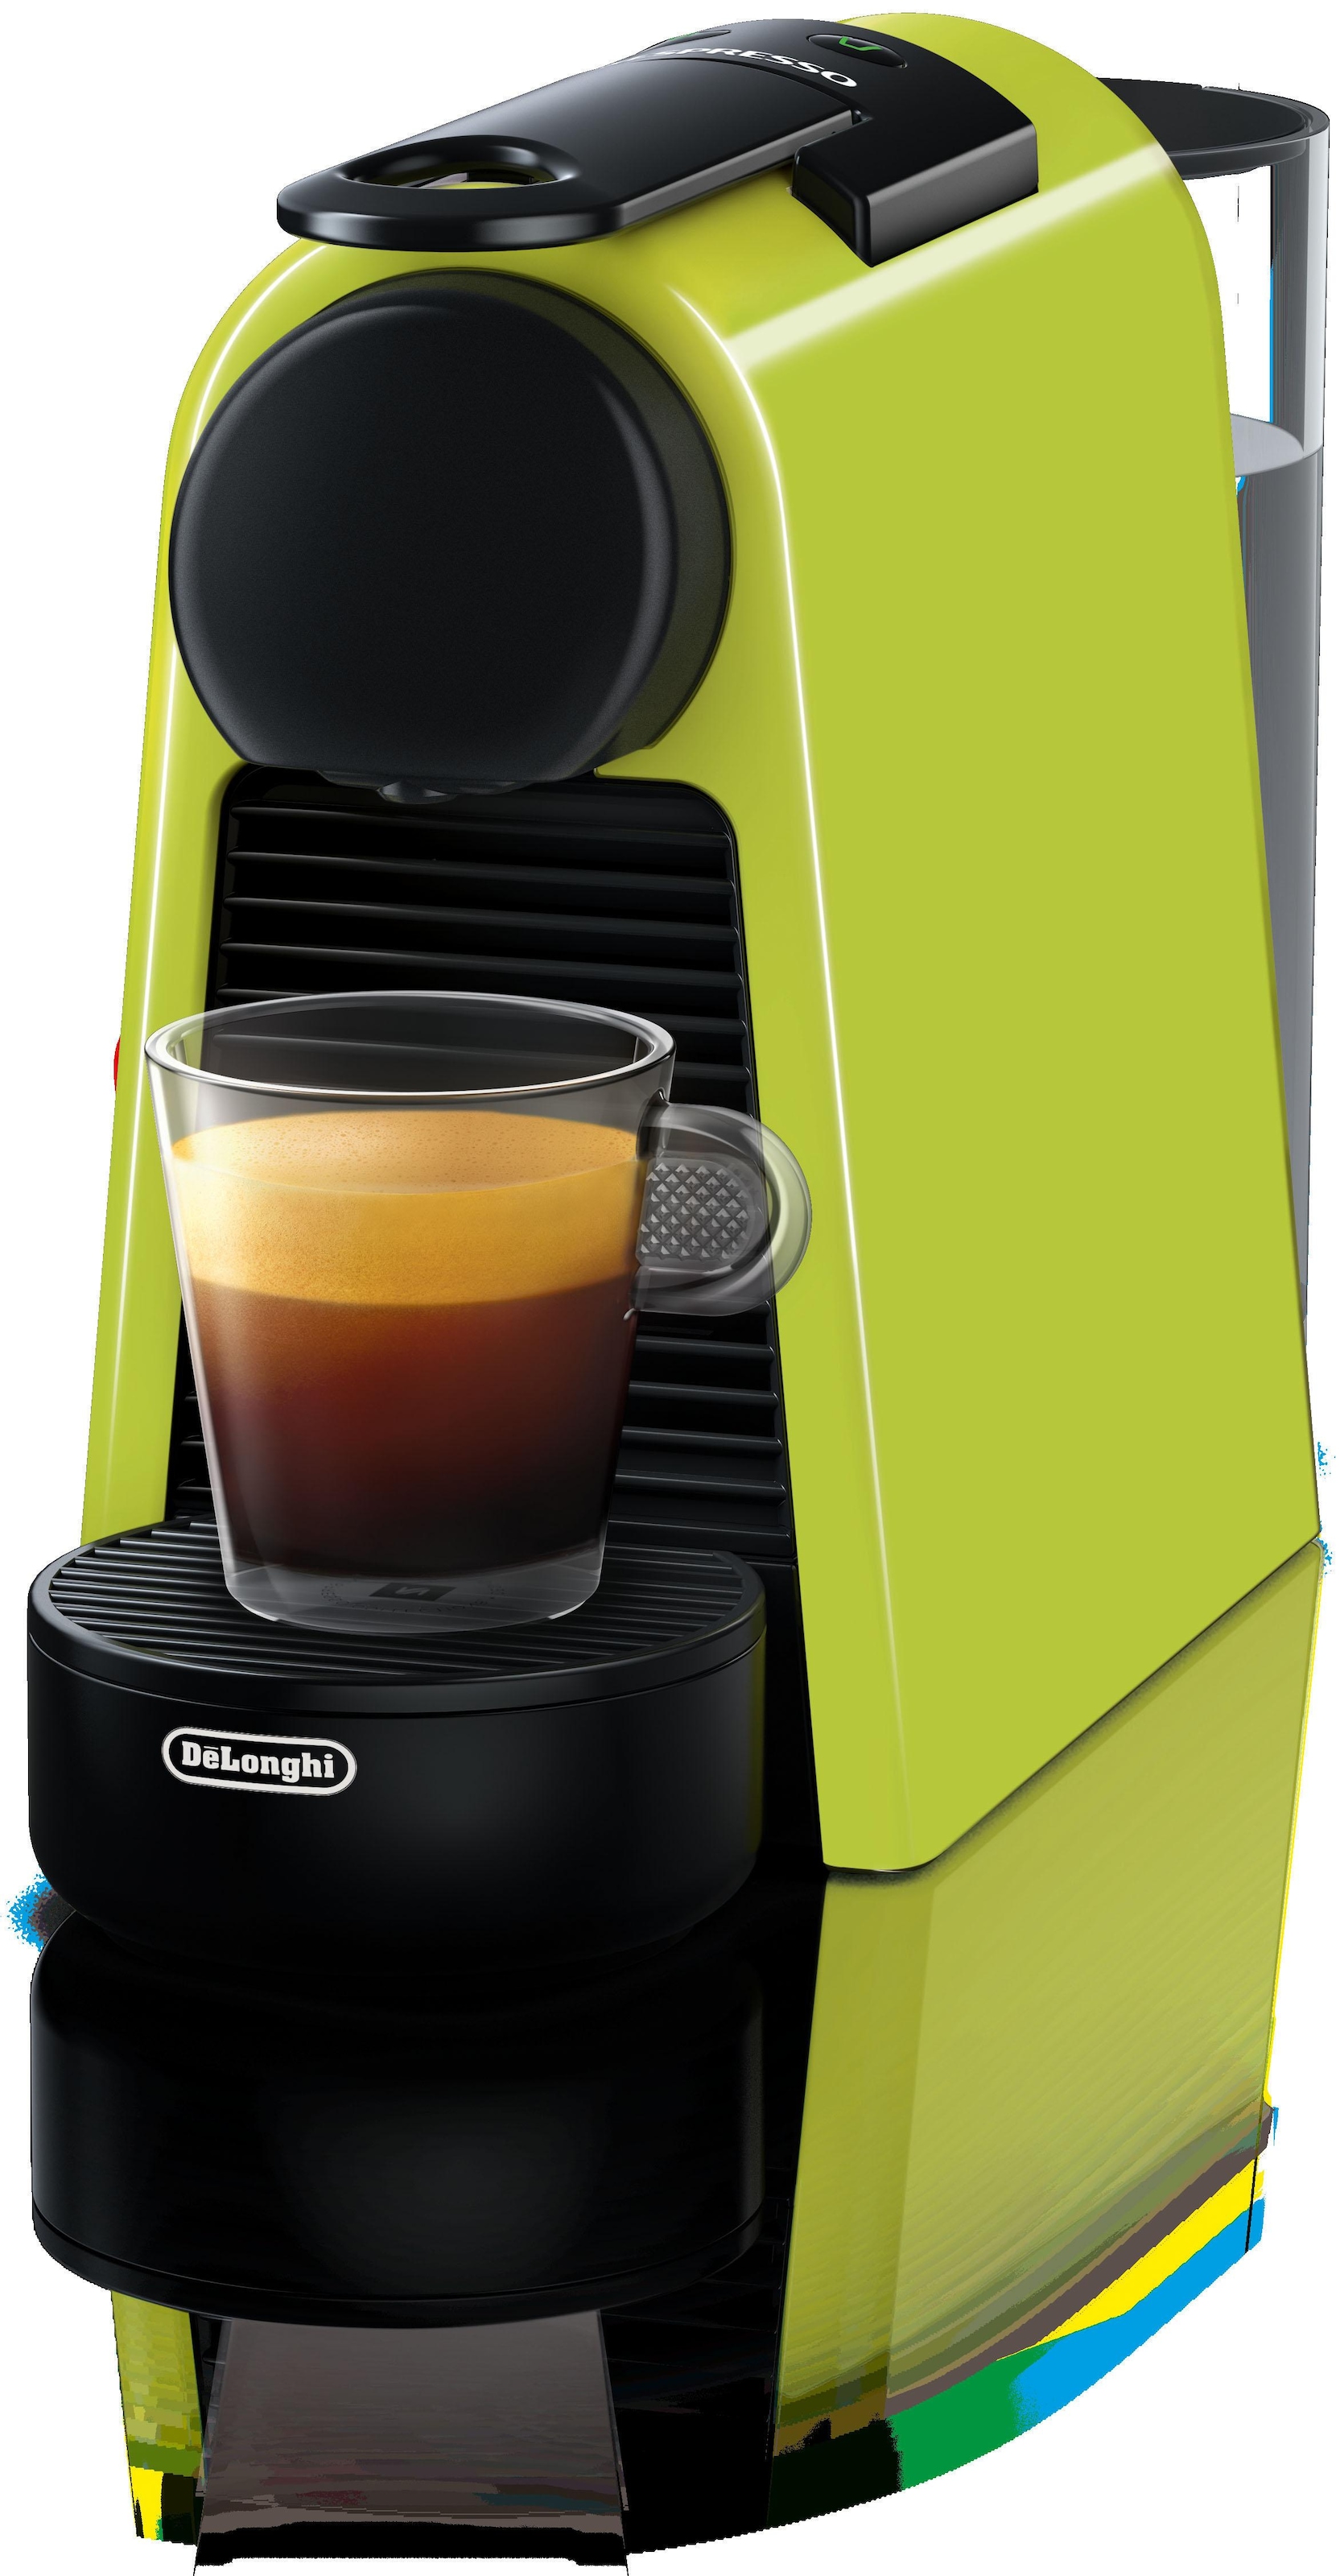 Nespresso Kapselmaschine »Essenza Mini EN85.L von DeLonghi, Lime Green«, inkl. Willkommenspaket mit 7 Kapseln